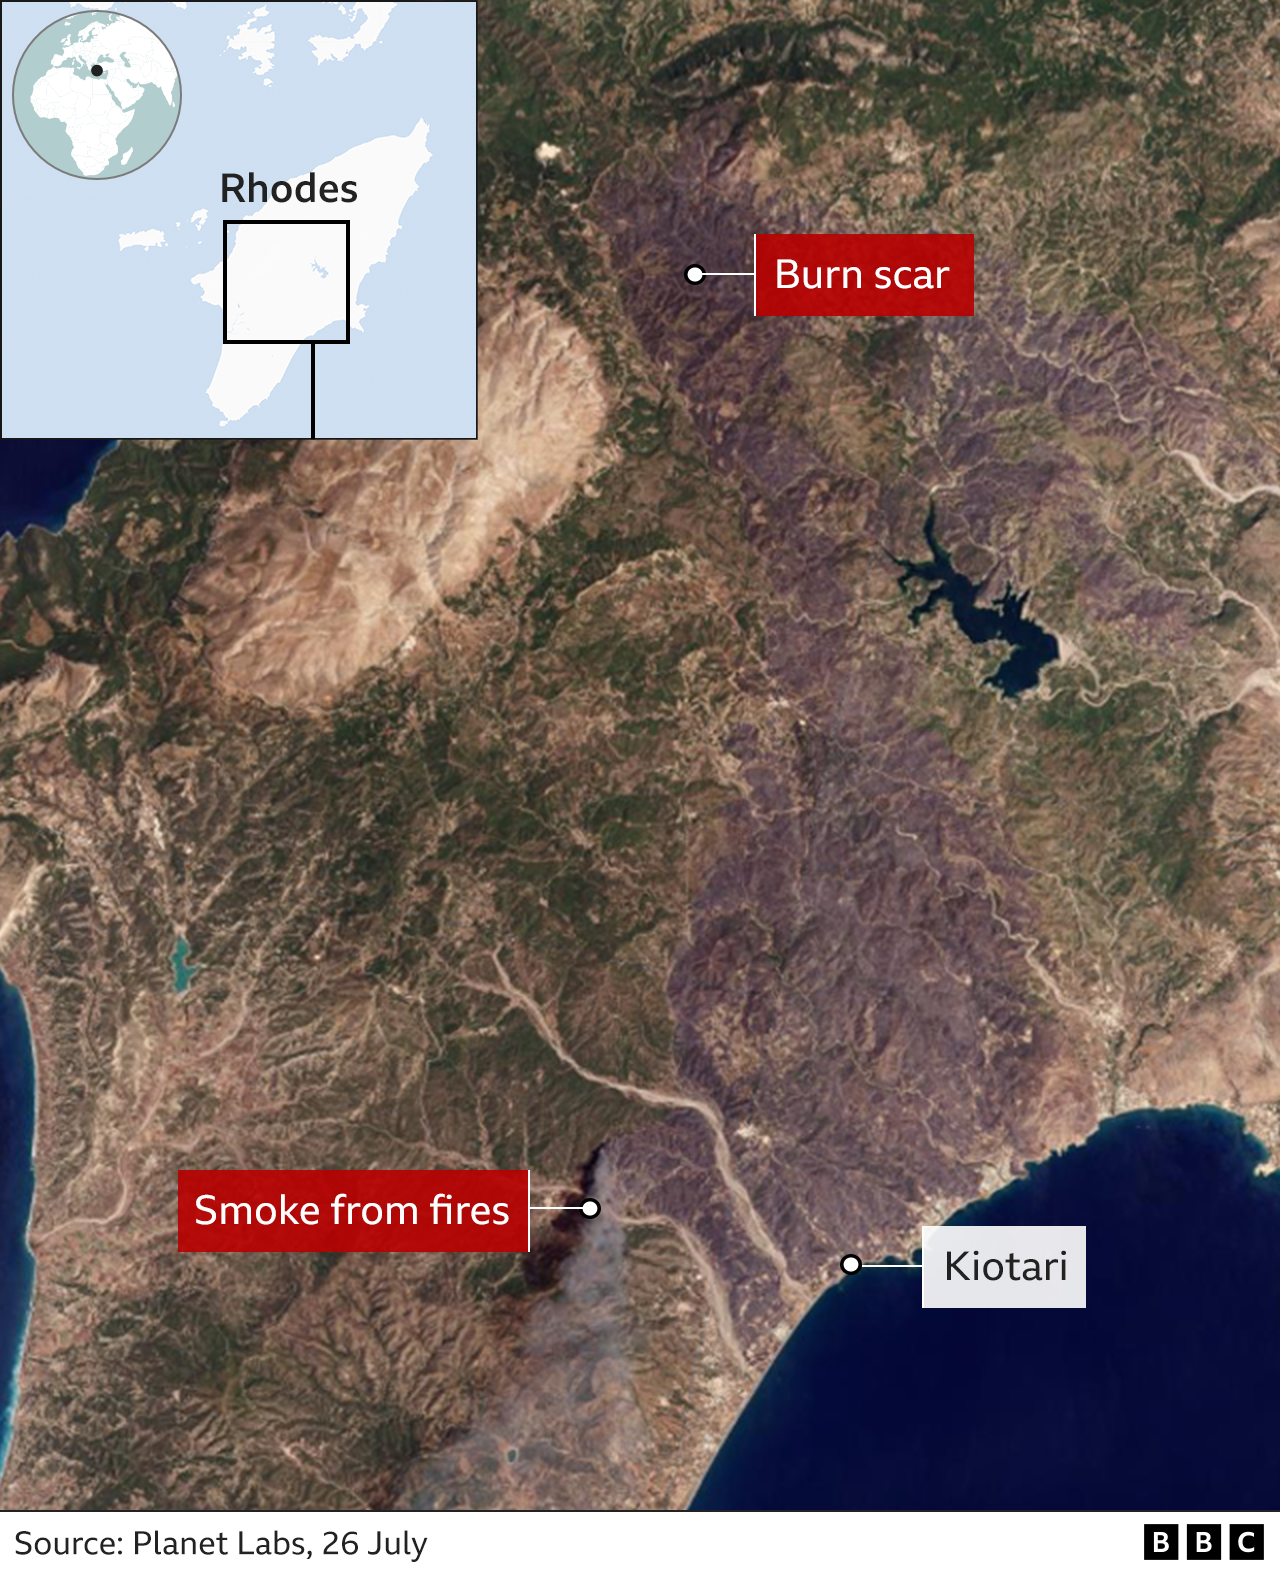 Satellite image shows burn scar and smoke from wildfires near Kiotari on Rhodes